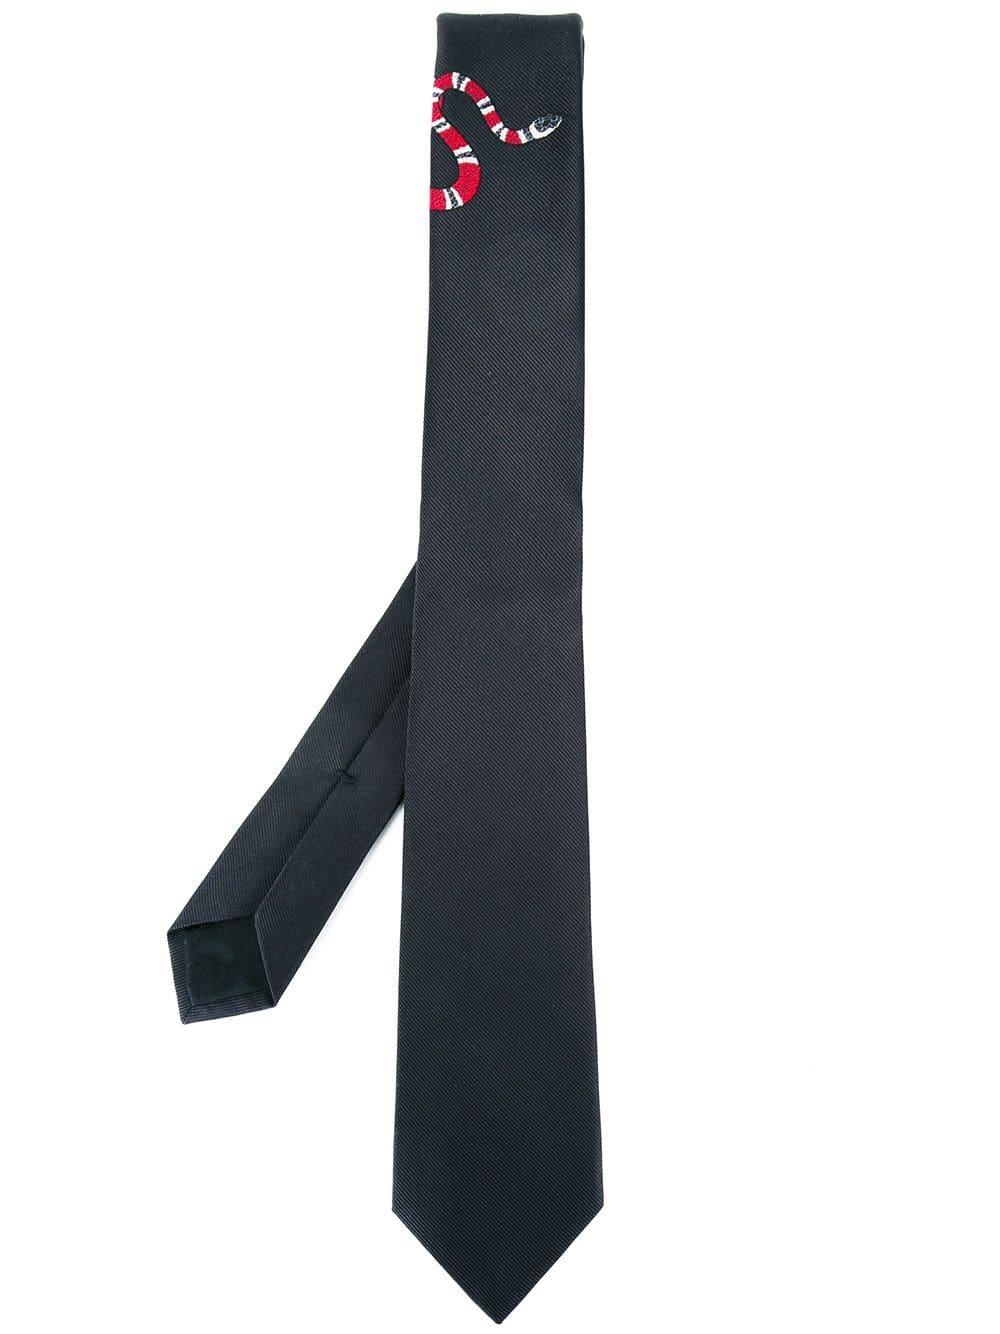 Gucci Silk Snake Print Tie in Black for Men - Lyst